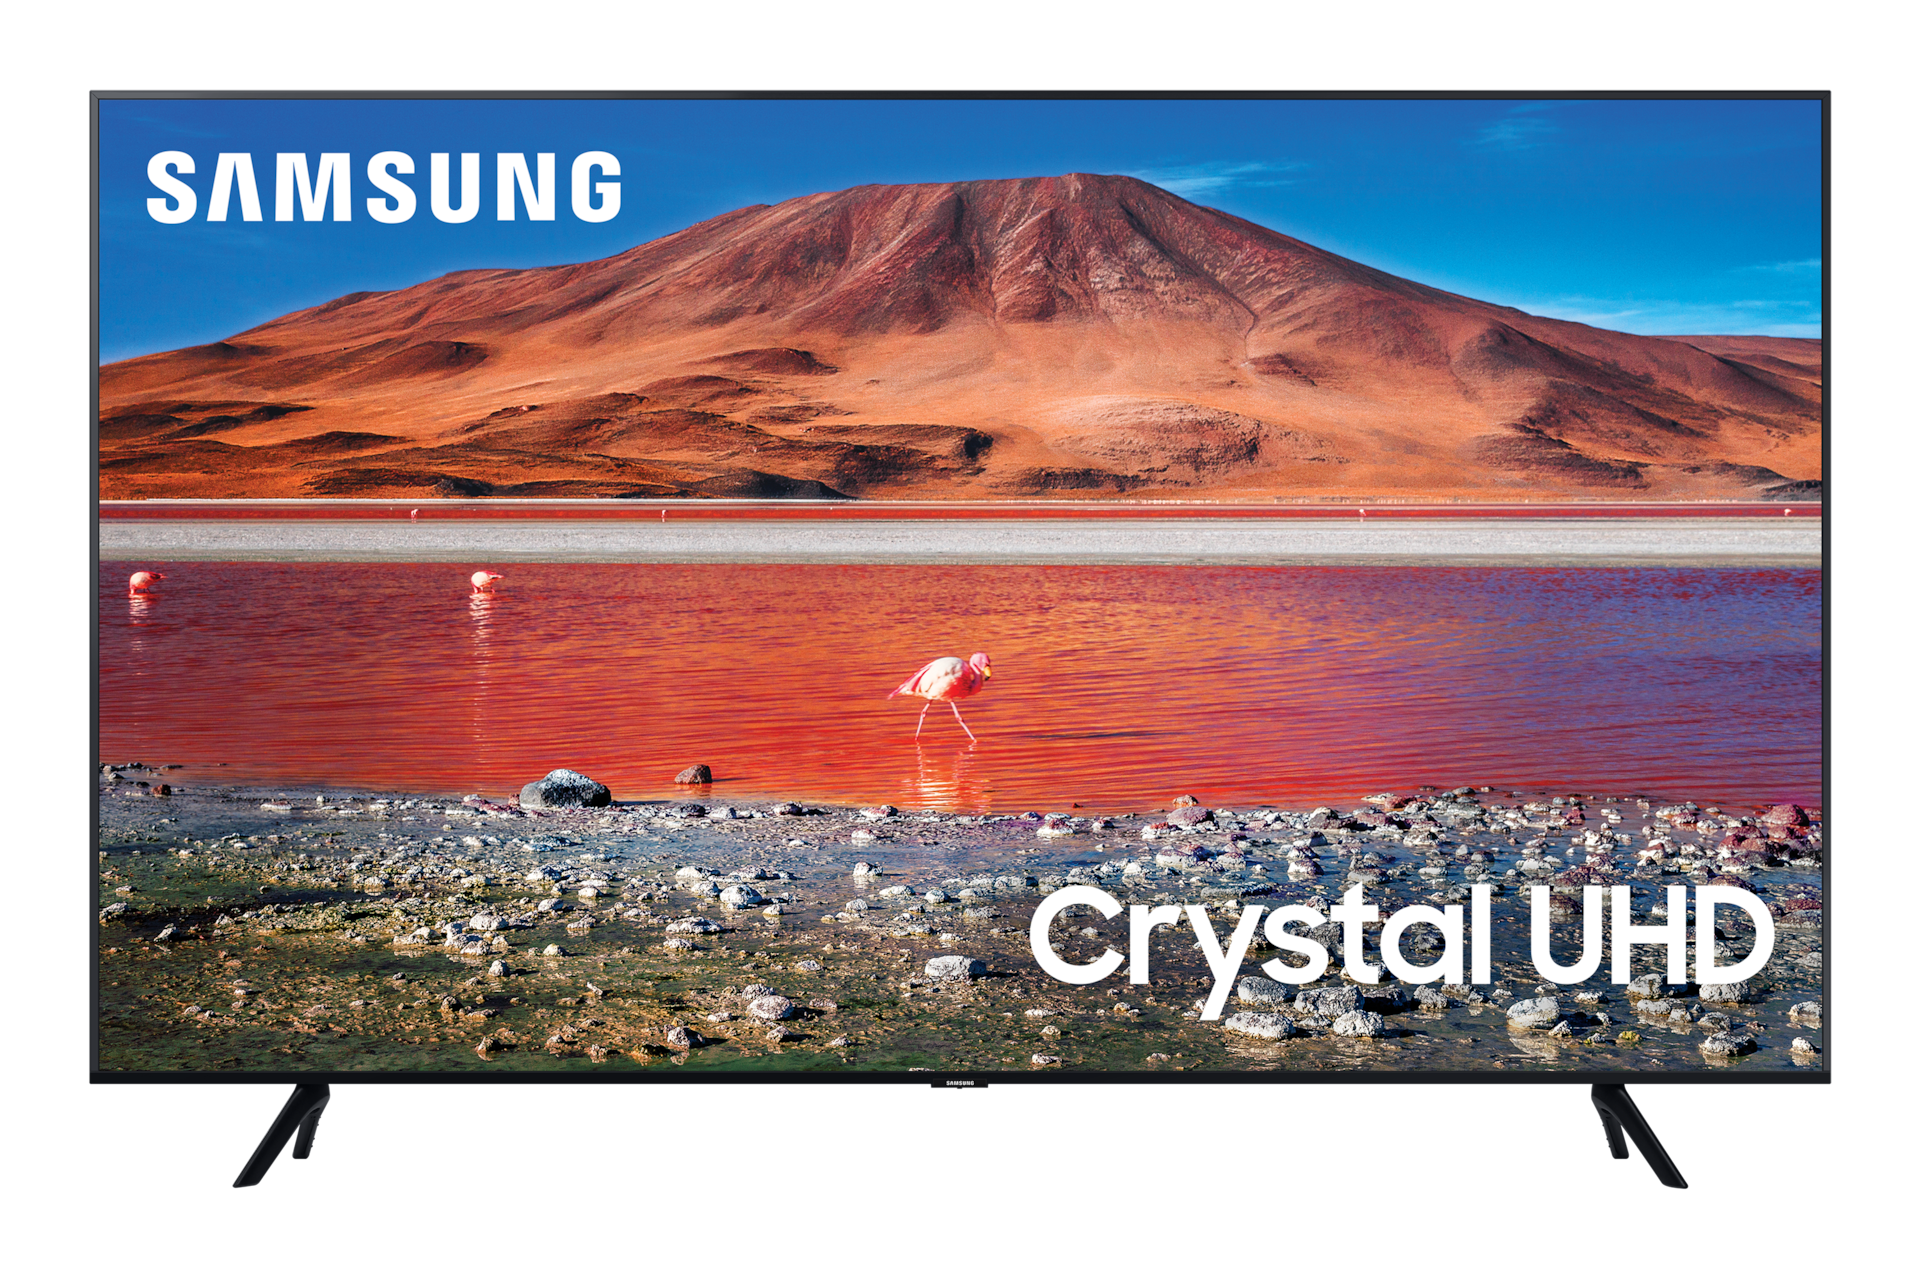 12++ Samsung 58 inch tu7000 crystal uhd 4k flat smart tv info